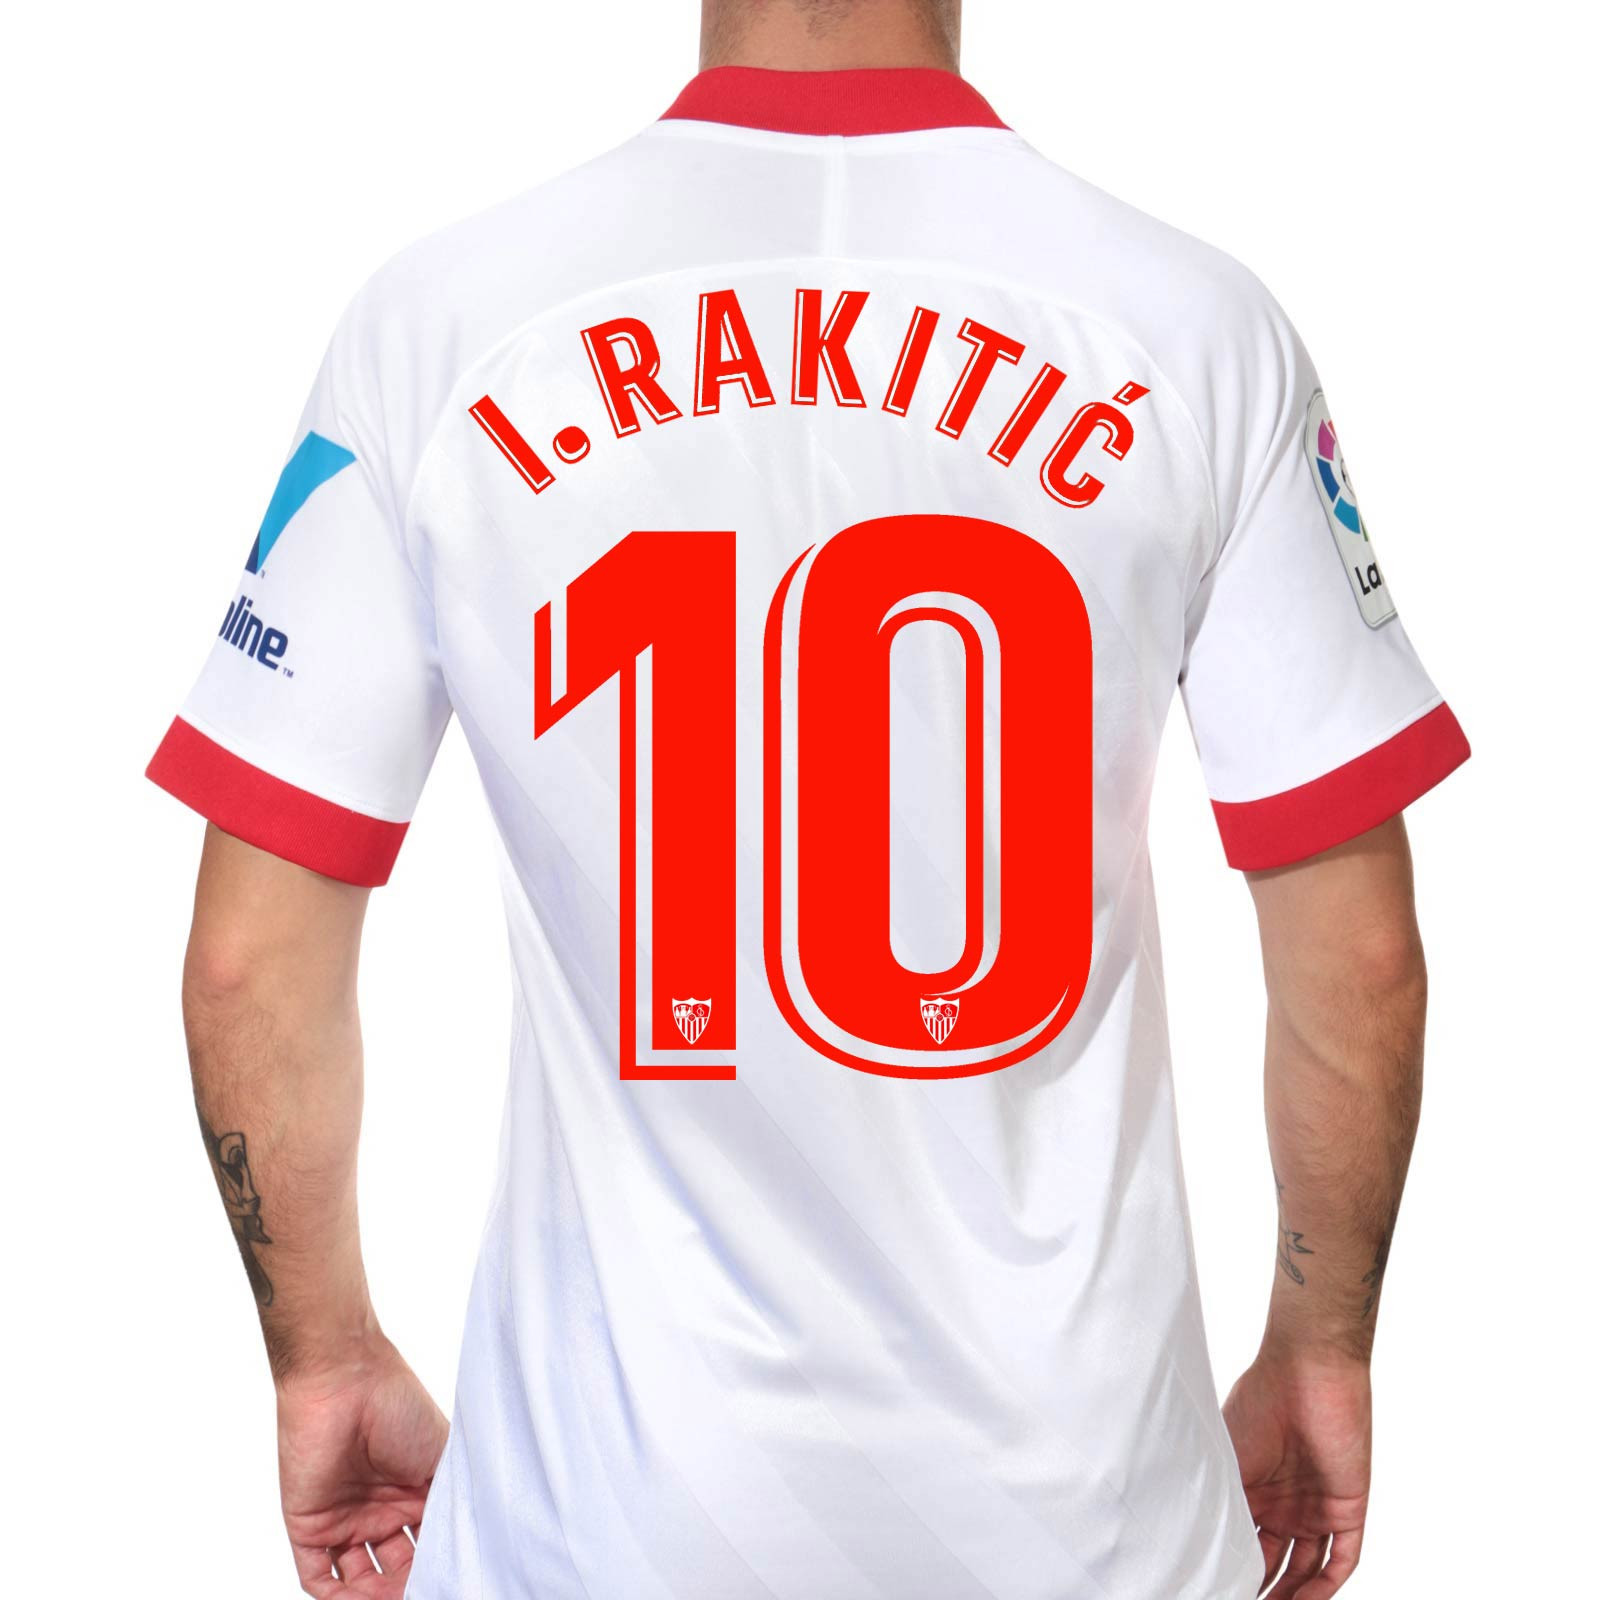 Camiseta Nike Rakitic Sevilla 2020 2021 blanca futbolmania